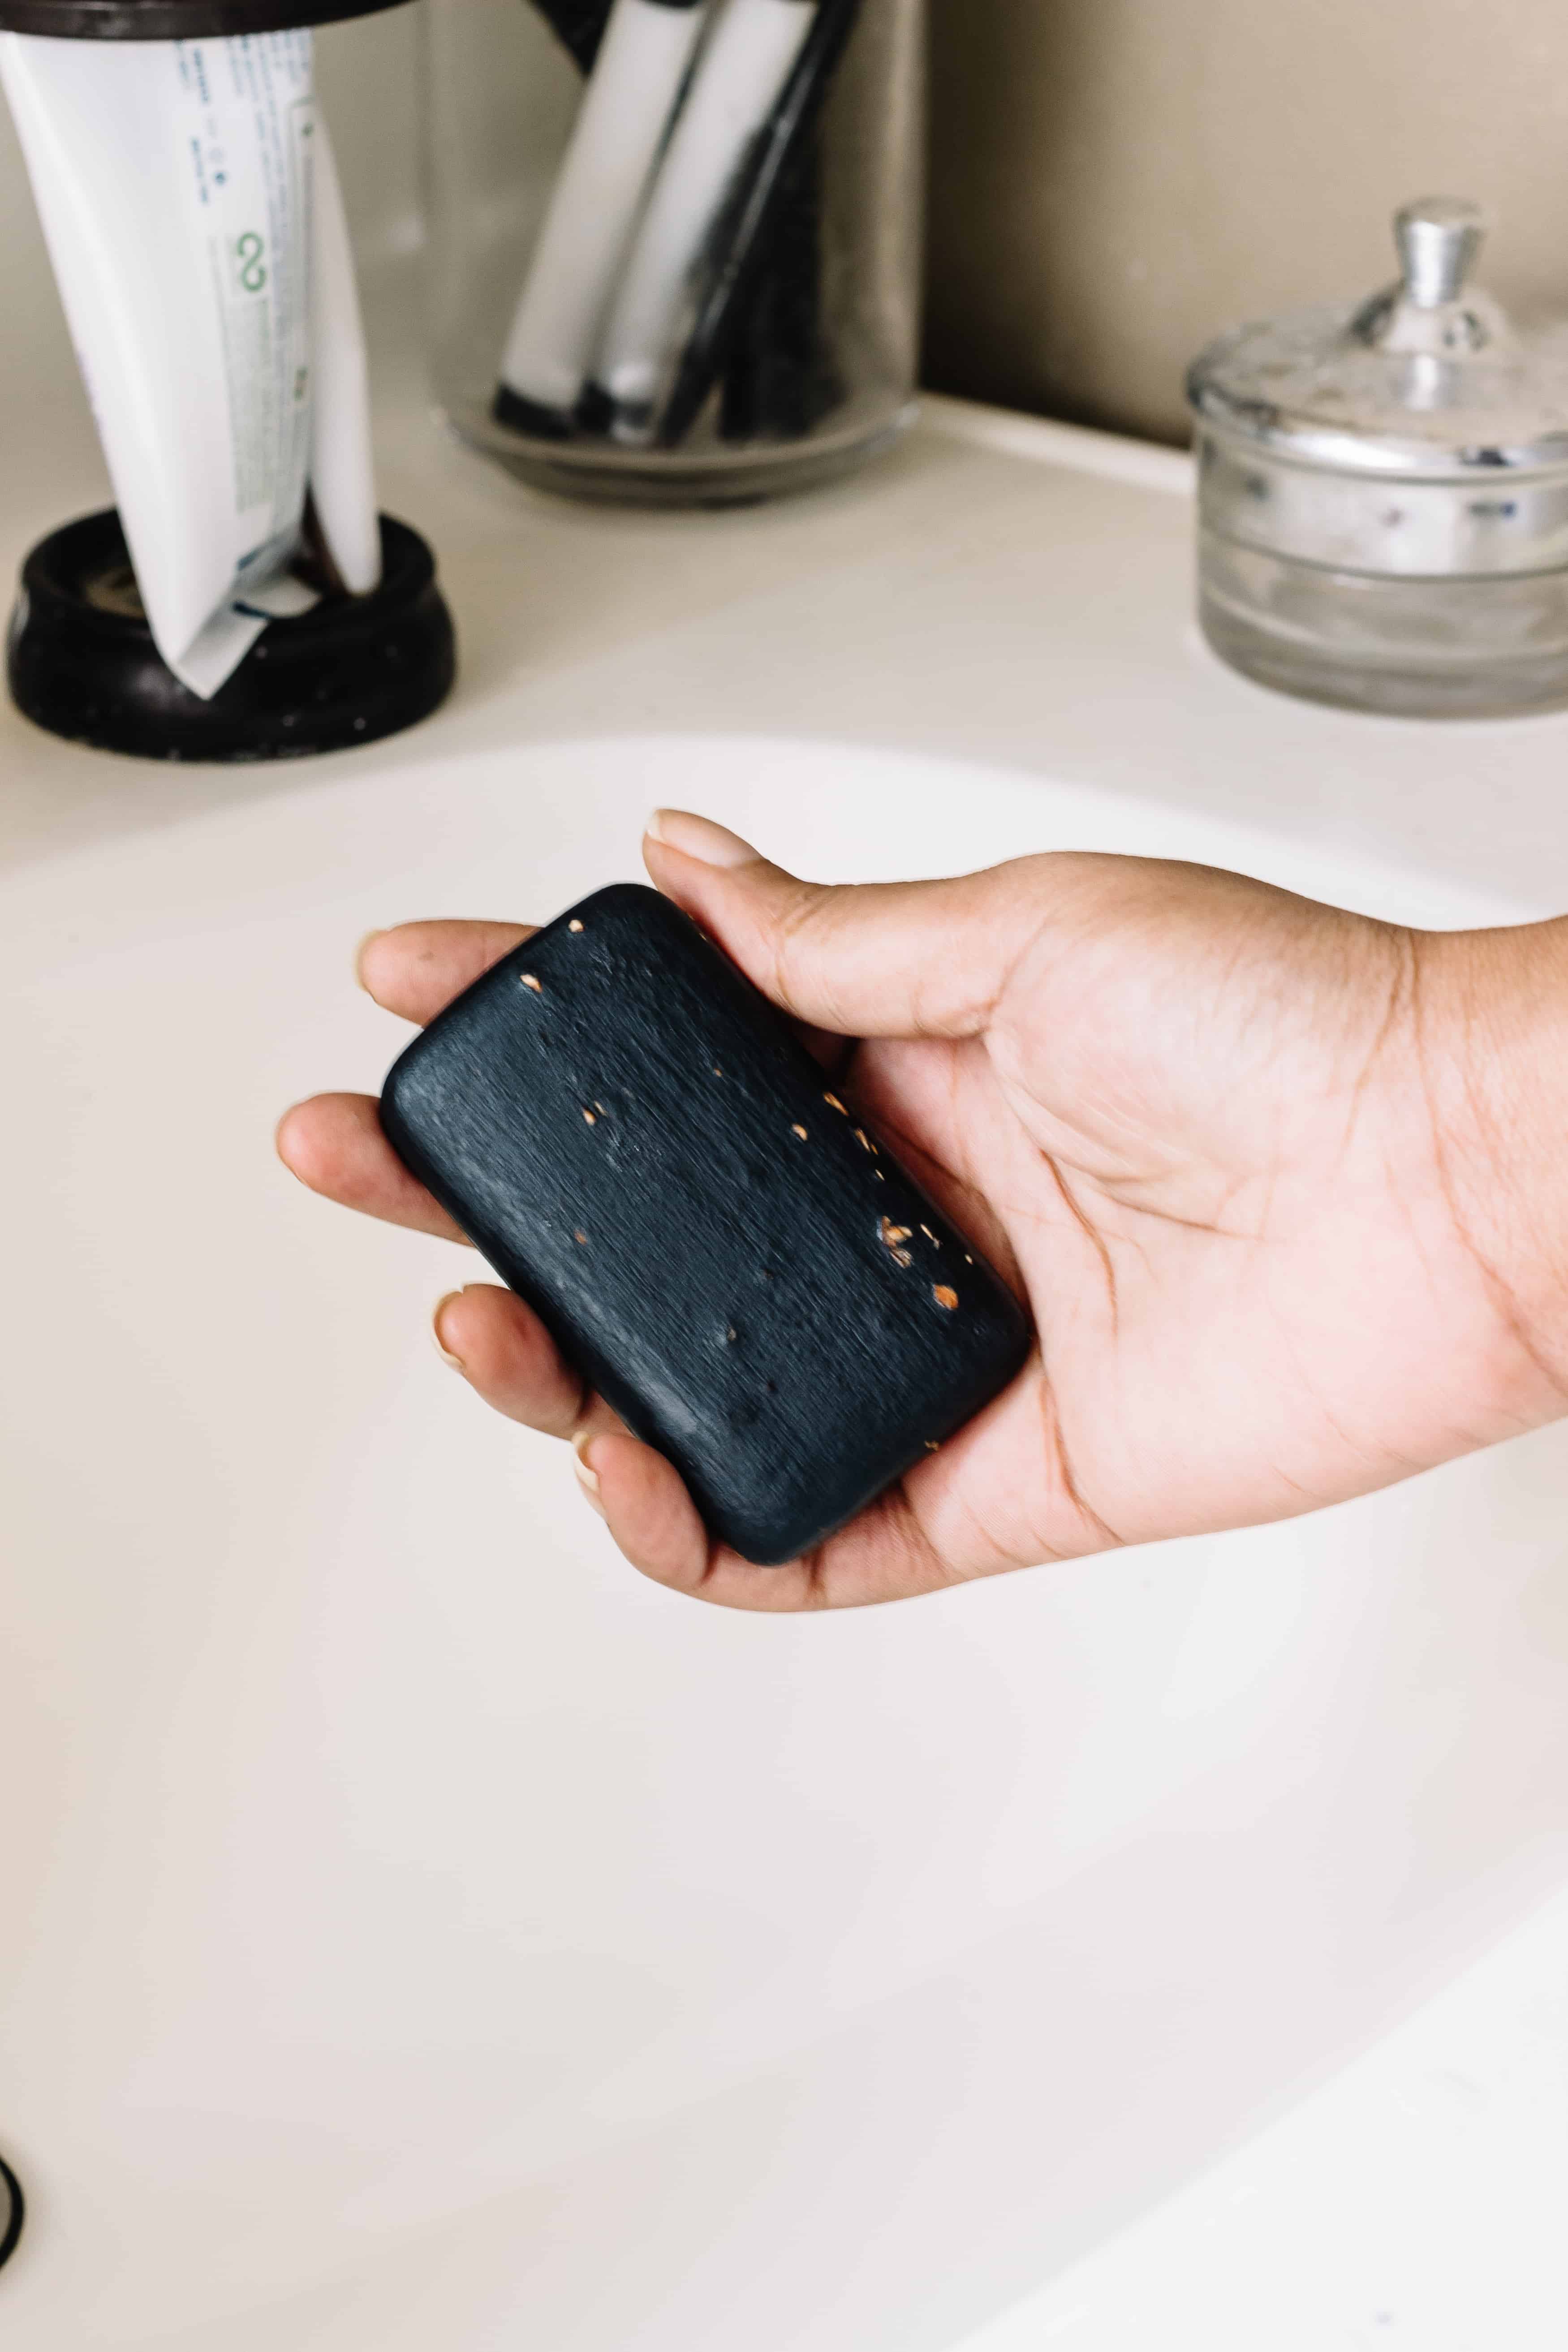 shea moisture african black soap bar